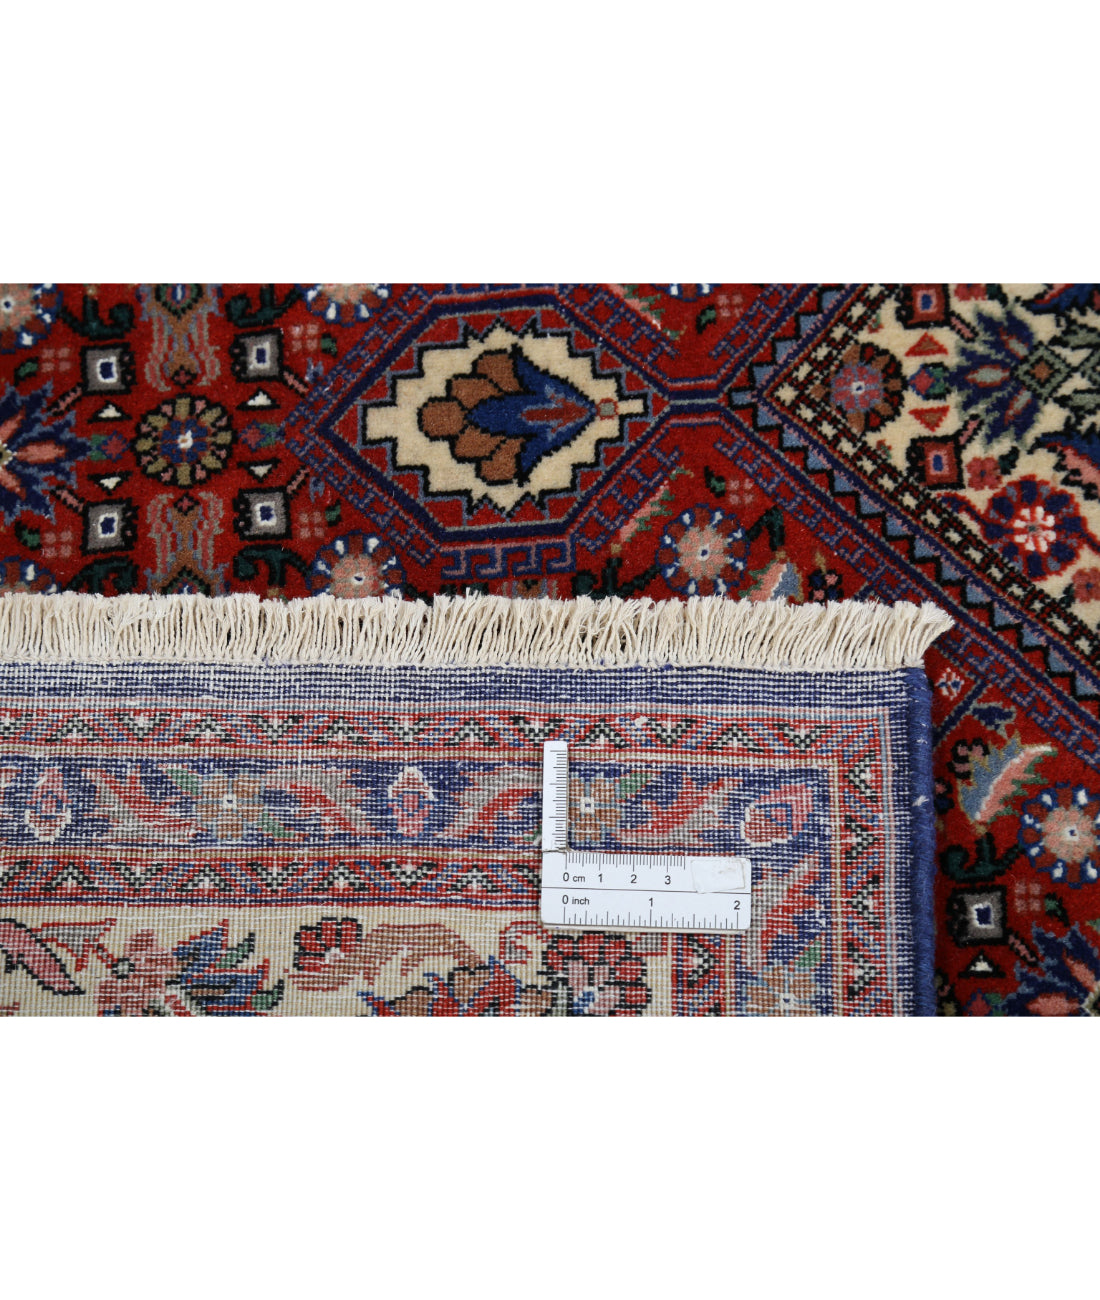 Hand Knotted Persian Bijar Wool Rug - 6'8'' x 9'11'' 6'8'' x 9'11'' (200 X 298) / Red / Ivory